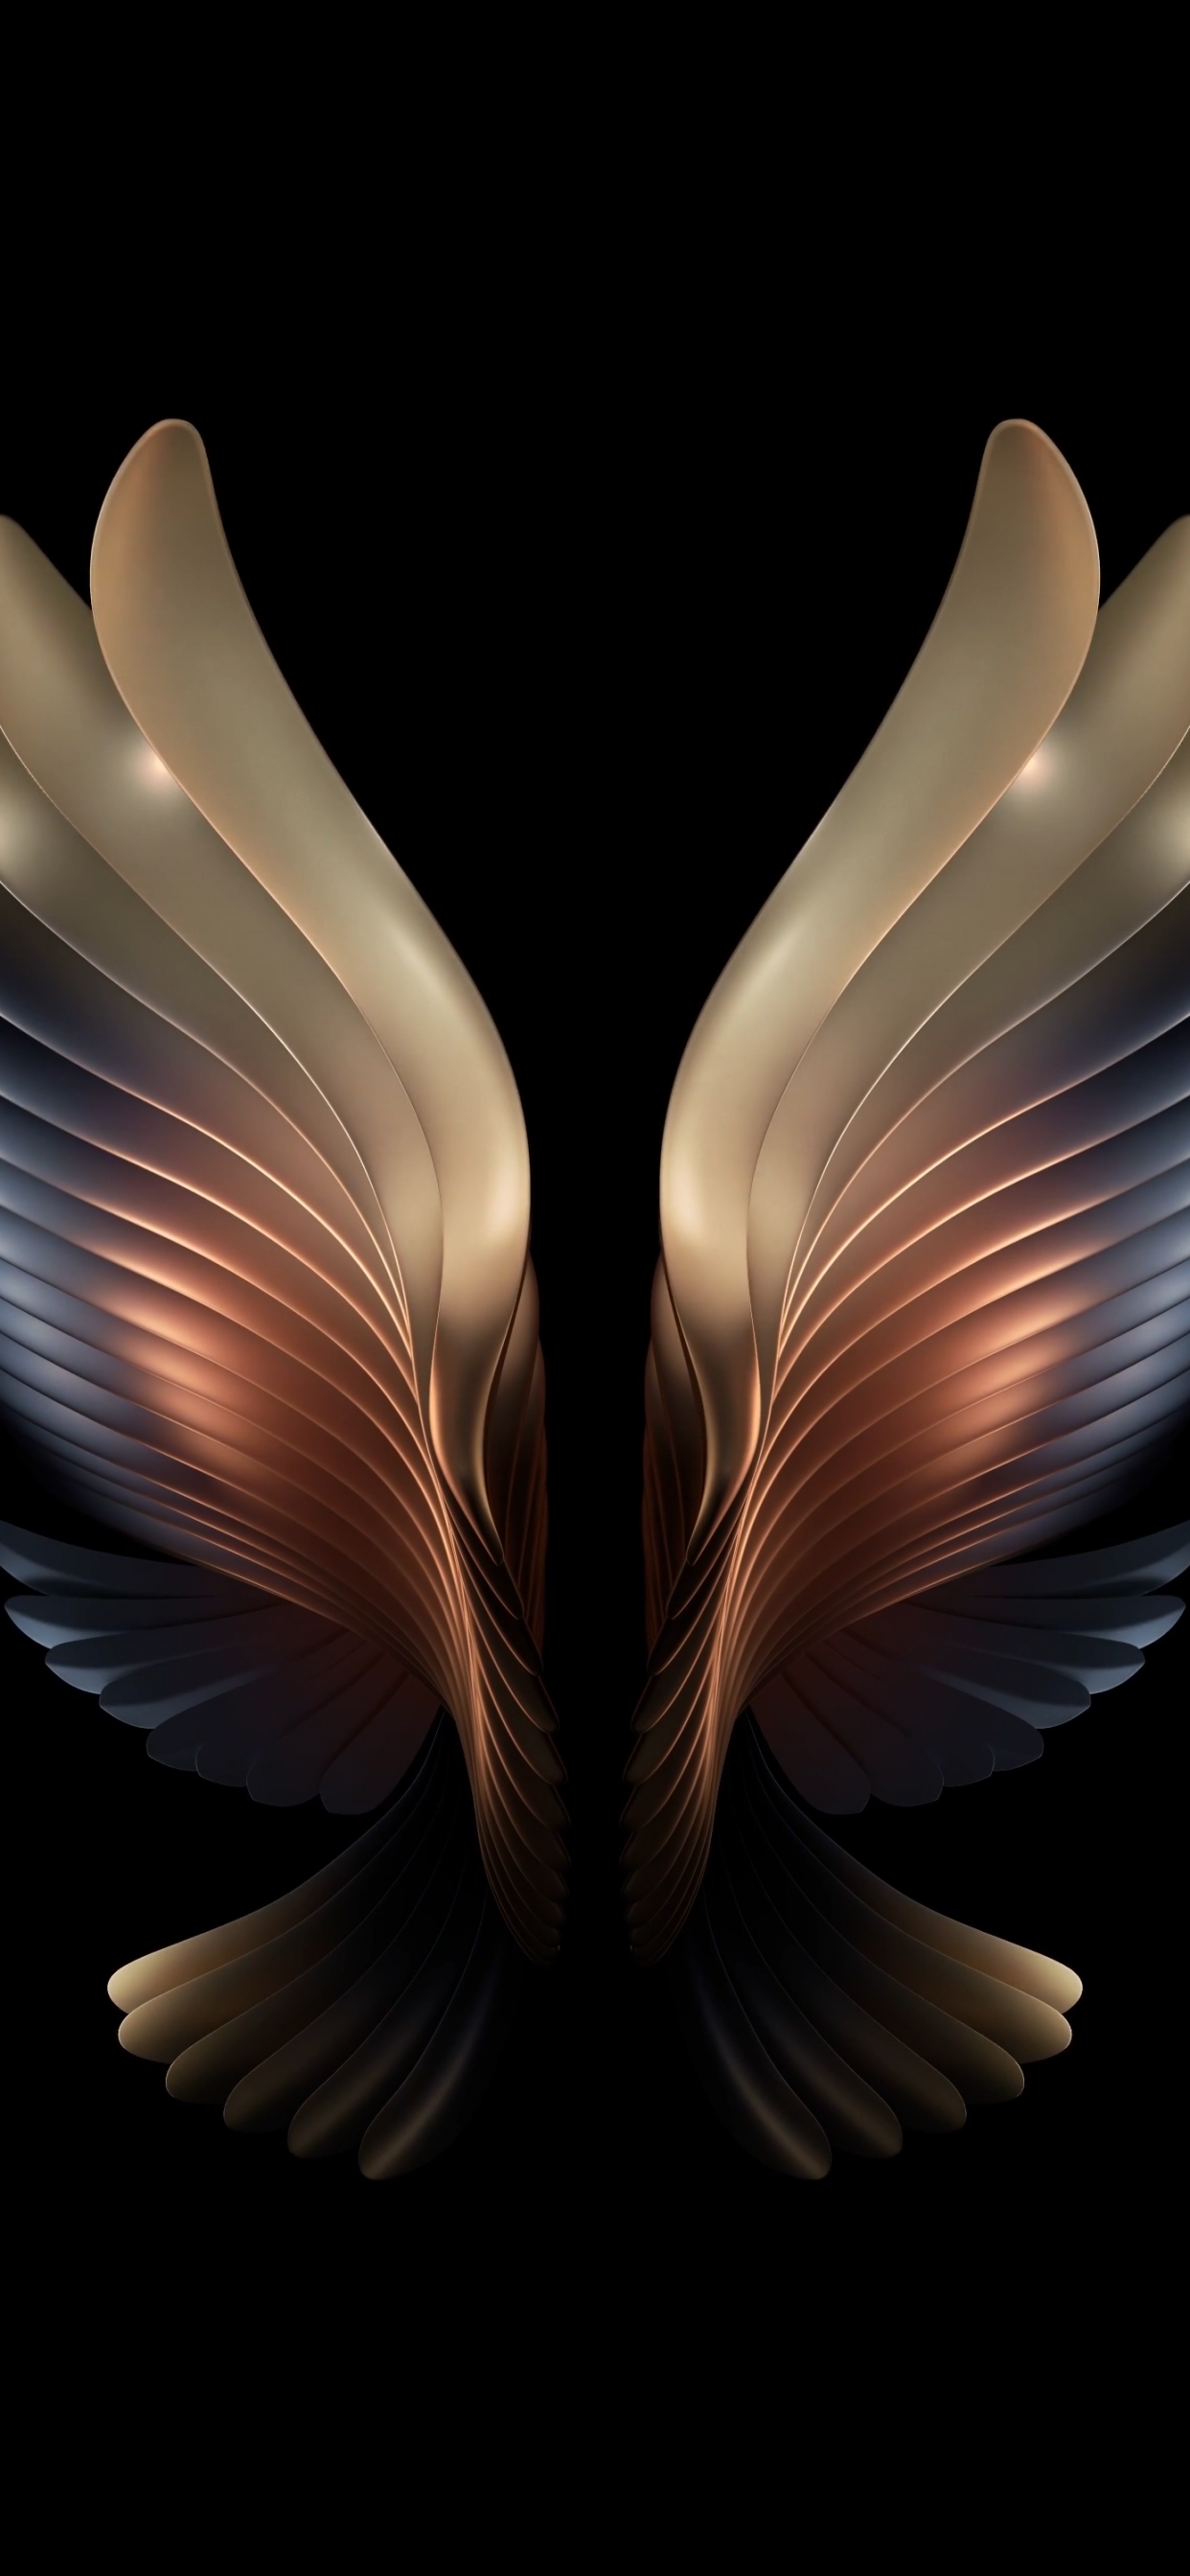 Samsung Galaxy W21 Wallpaper 4K, Samsung Galaxy Fold, AMOLED, Angel wings, Abstract